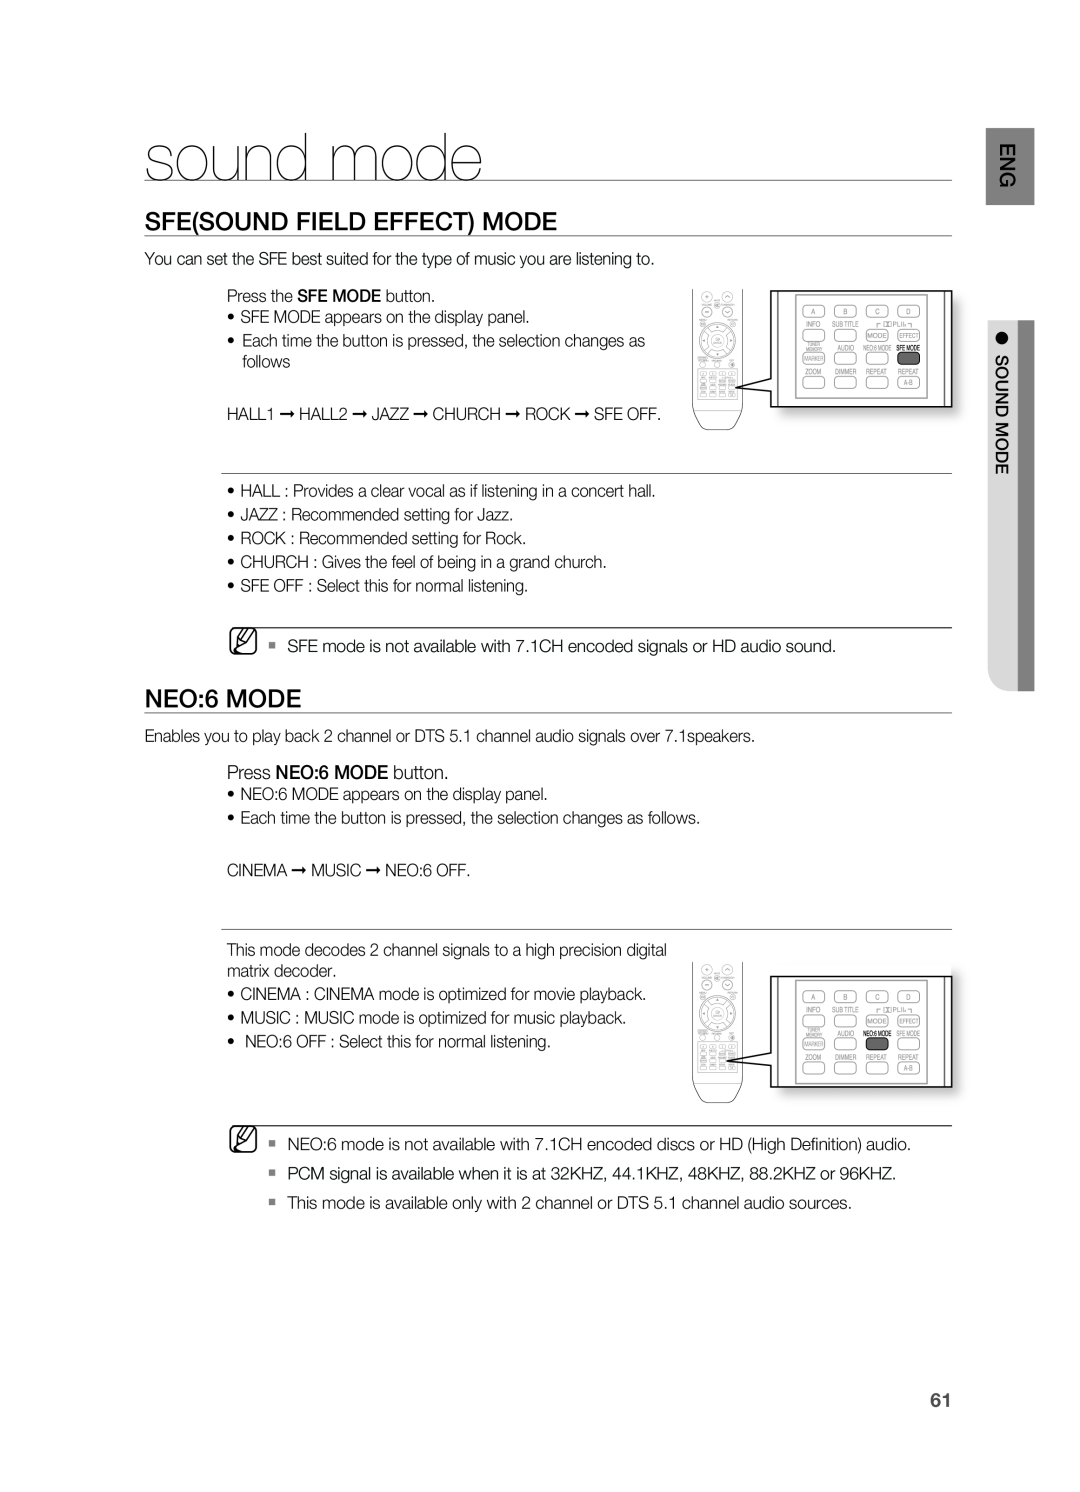 Samsung HT-BD2S manual sound mode, SFESOUnD FIELD EFFECT MODE, nEO 6 MODE 